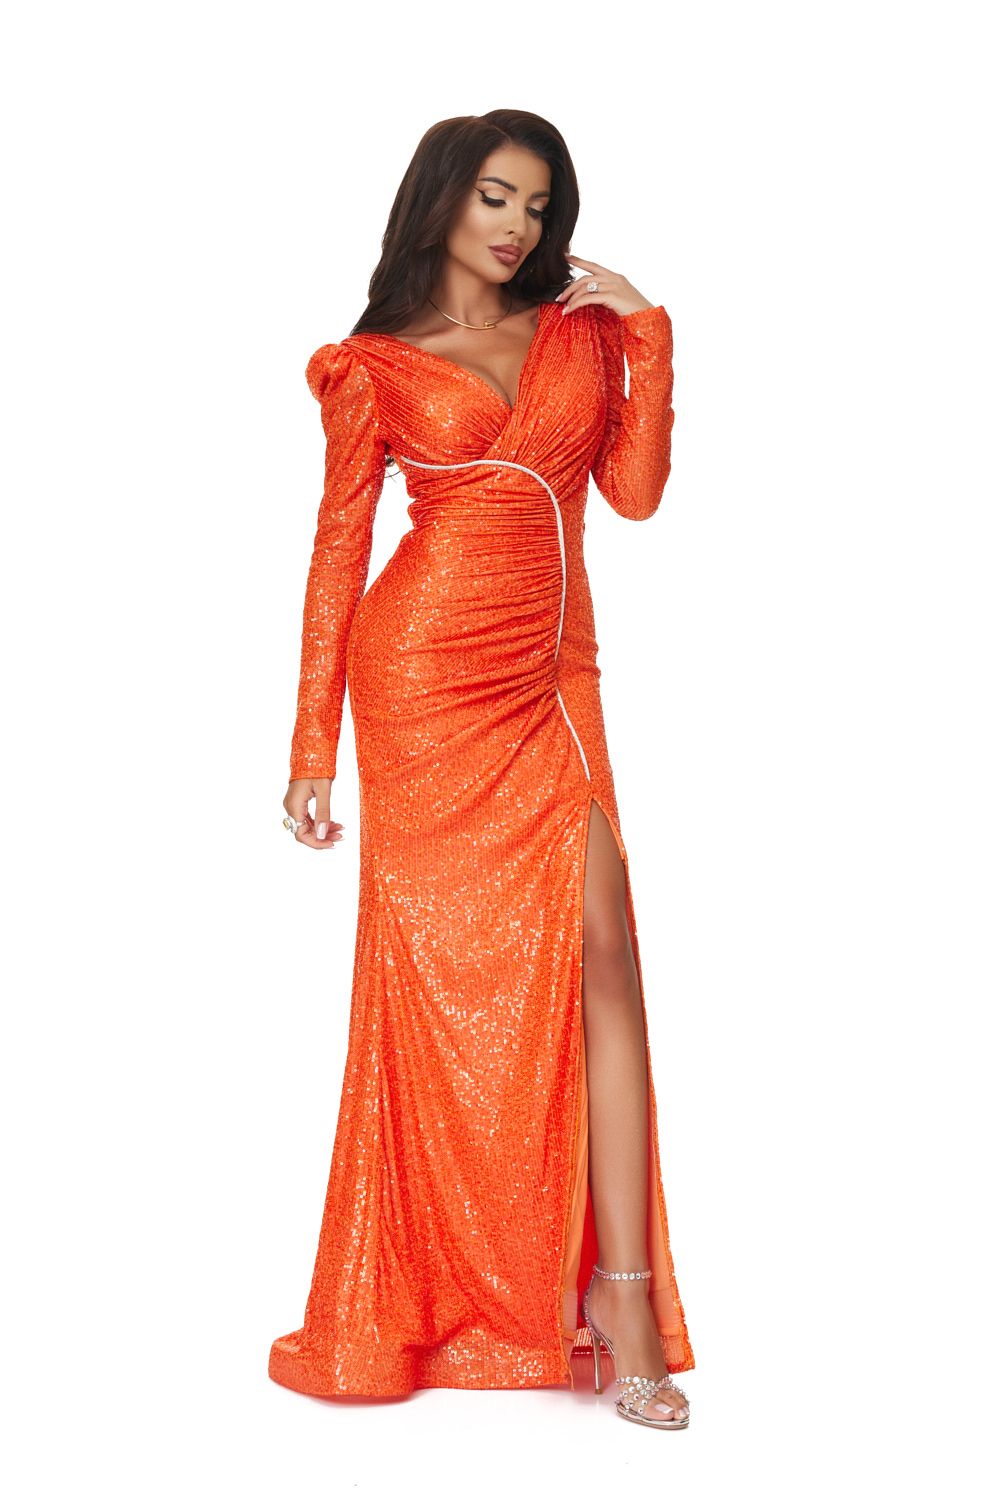 Long orange dress for women Olez Bogas